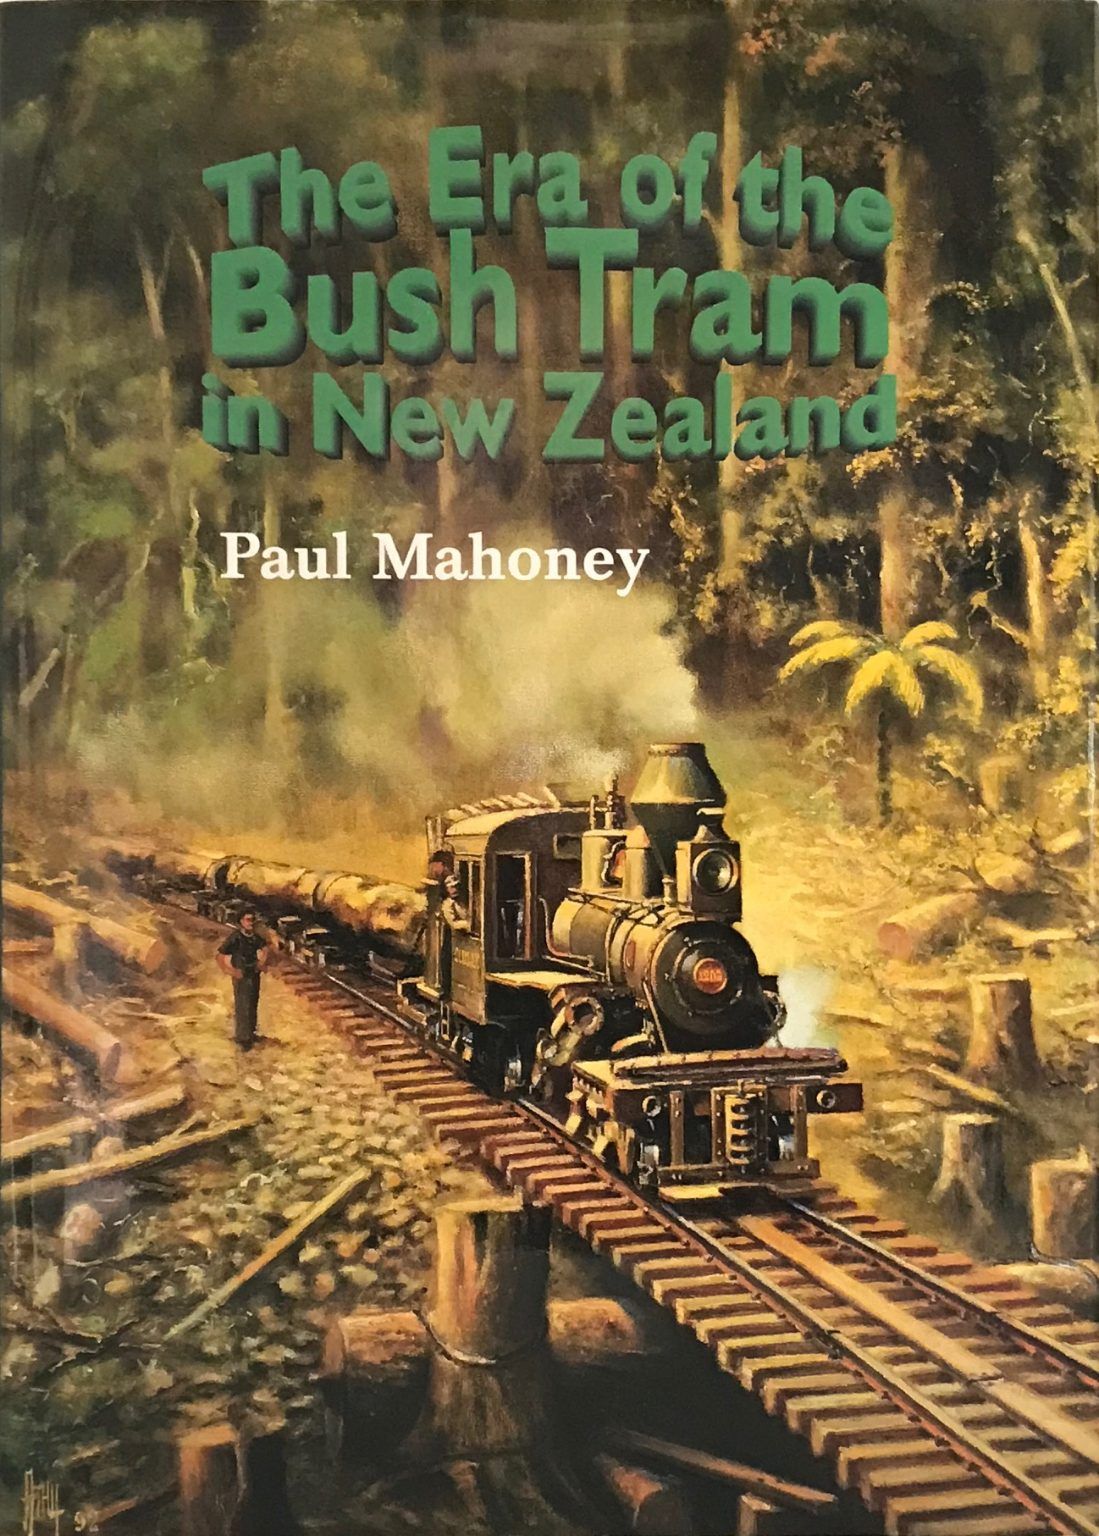 THE ERA OF THE BUSH TRAM IN NEW ZEALAND